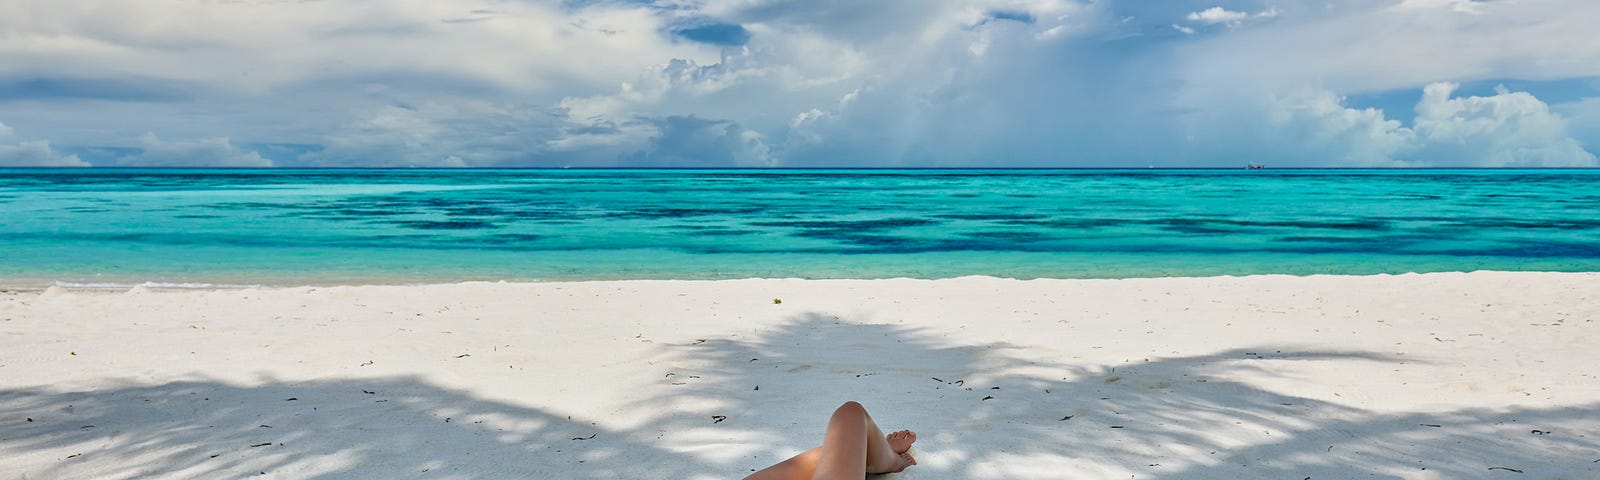 Woman in bikini at tropical beach under the palm tree